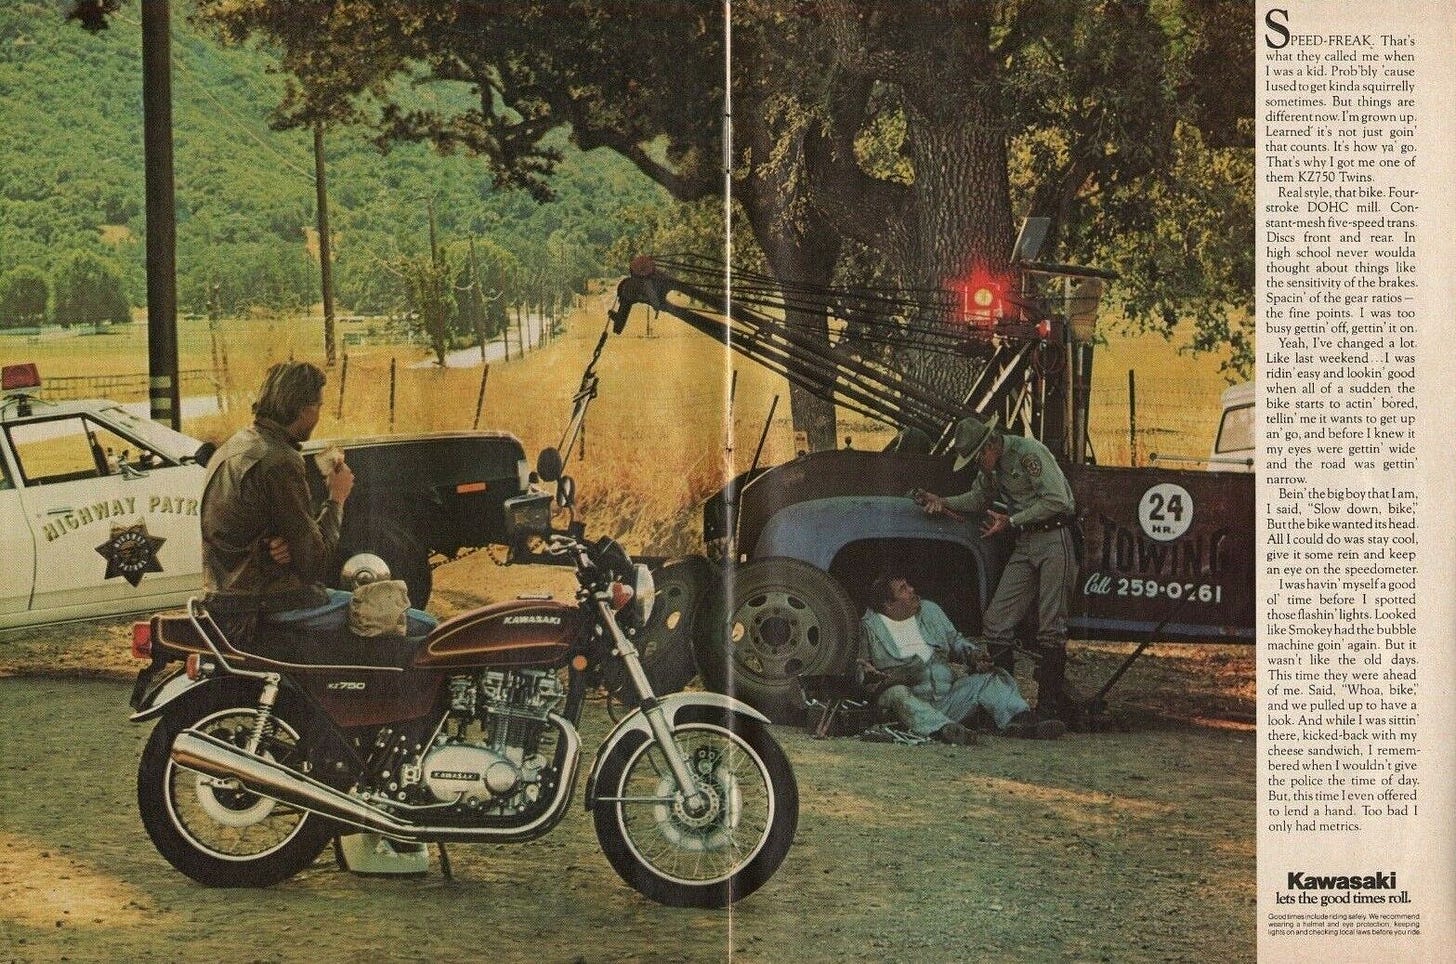 1976 Kawasaki KZ750 Twin - 2-Page Vintage Motorcycle Ad | eBay